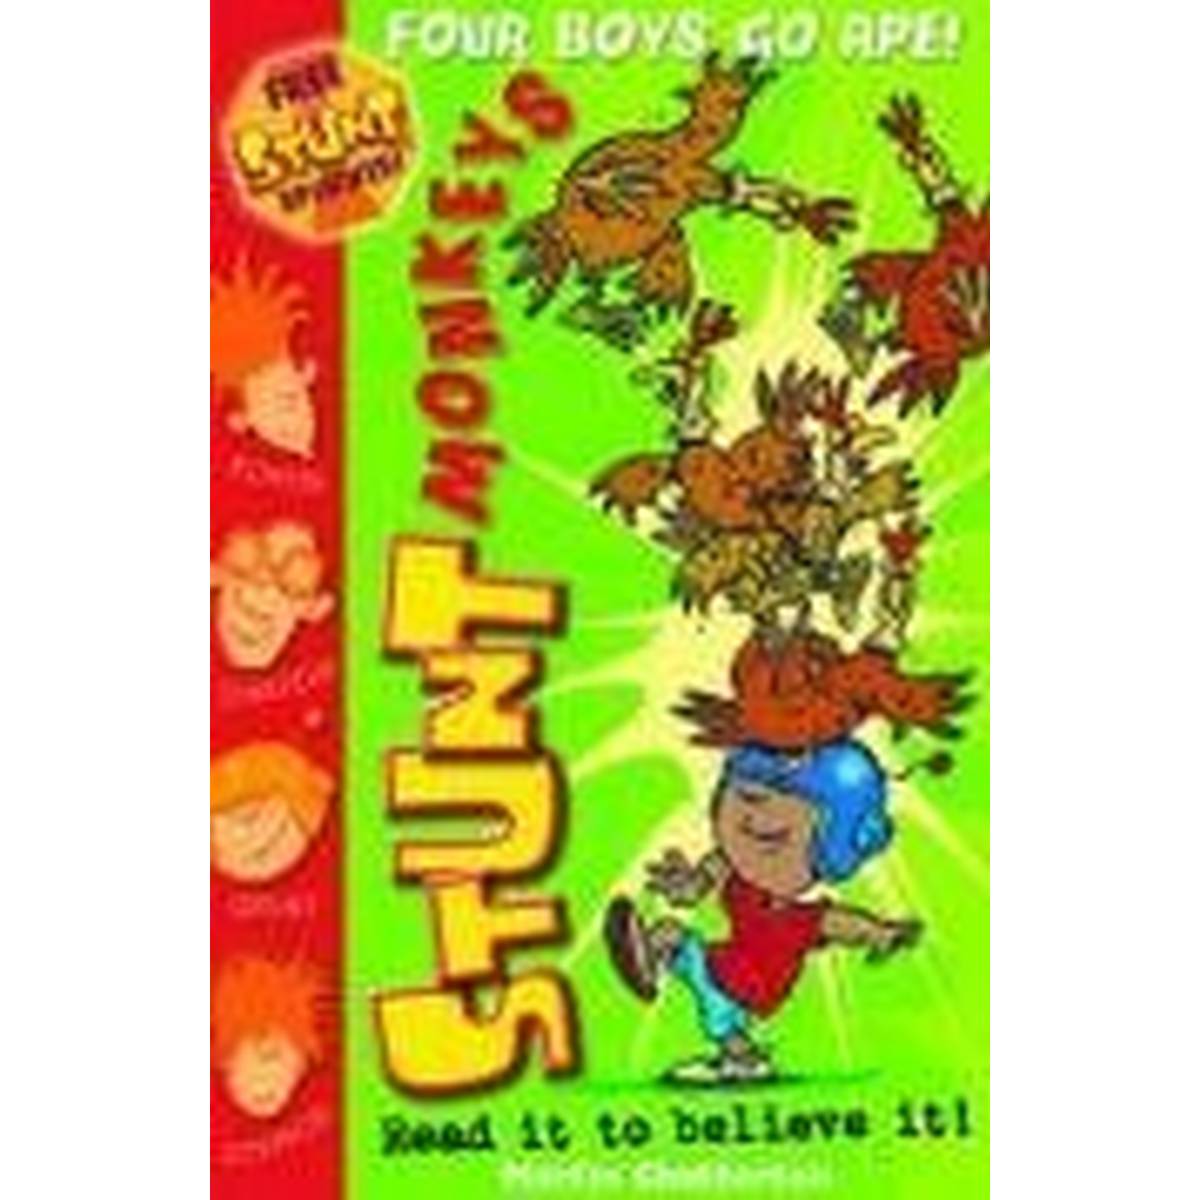 Four Boys Go Ape (Stunt Monkeys) 1